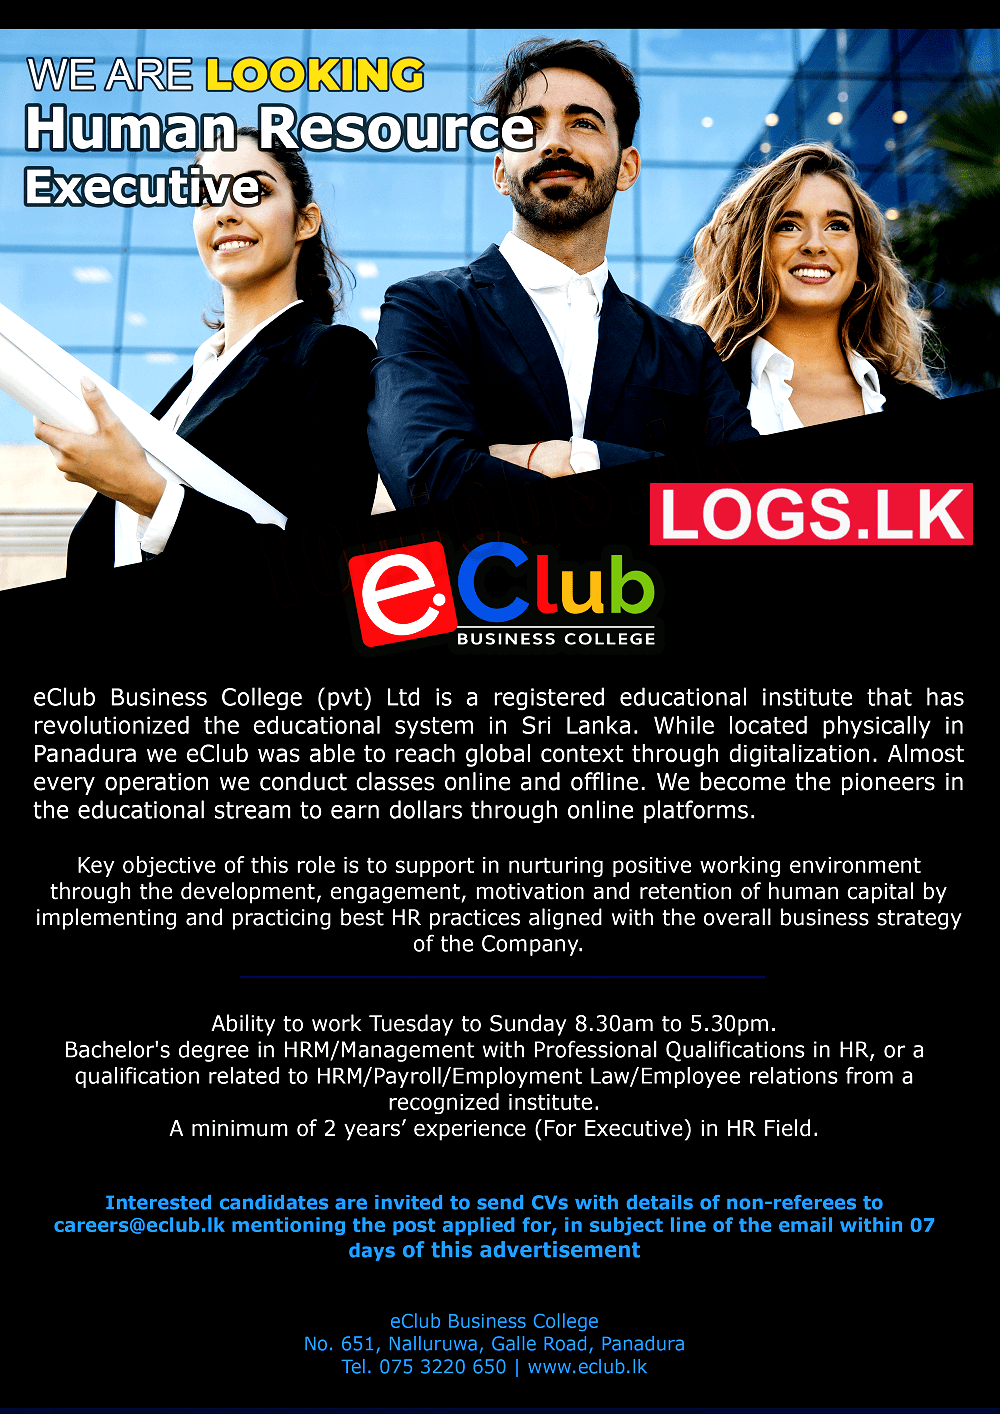 Human Resources Executive Vacancy at eClub Business College Job Vacancies